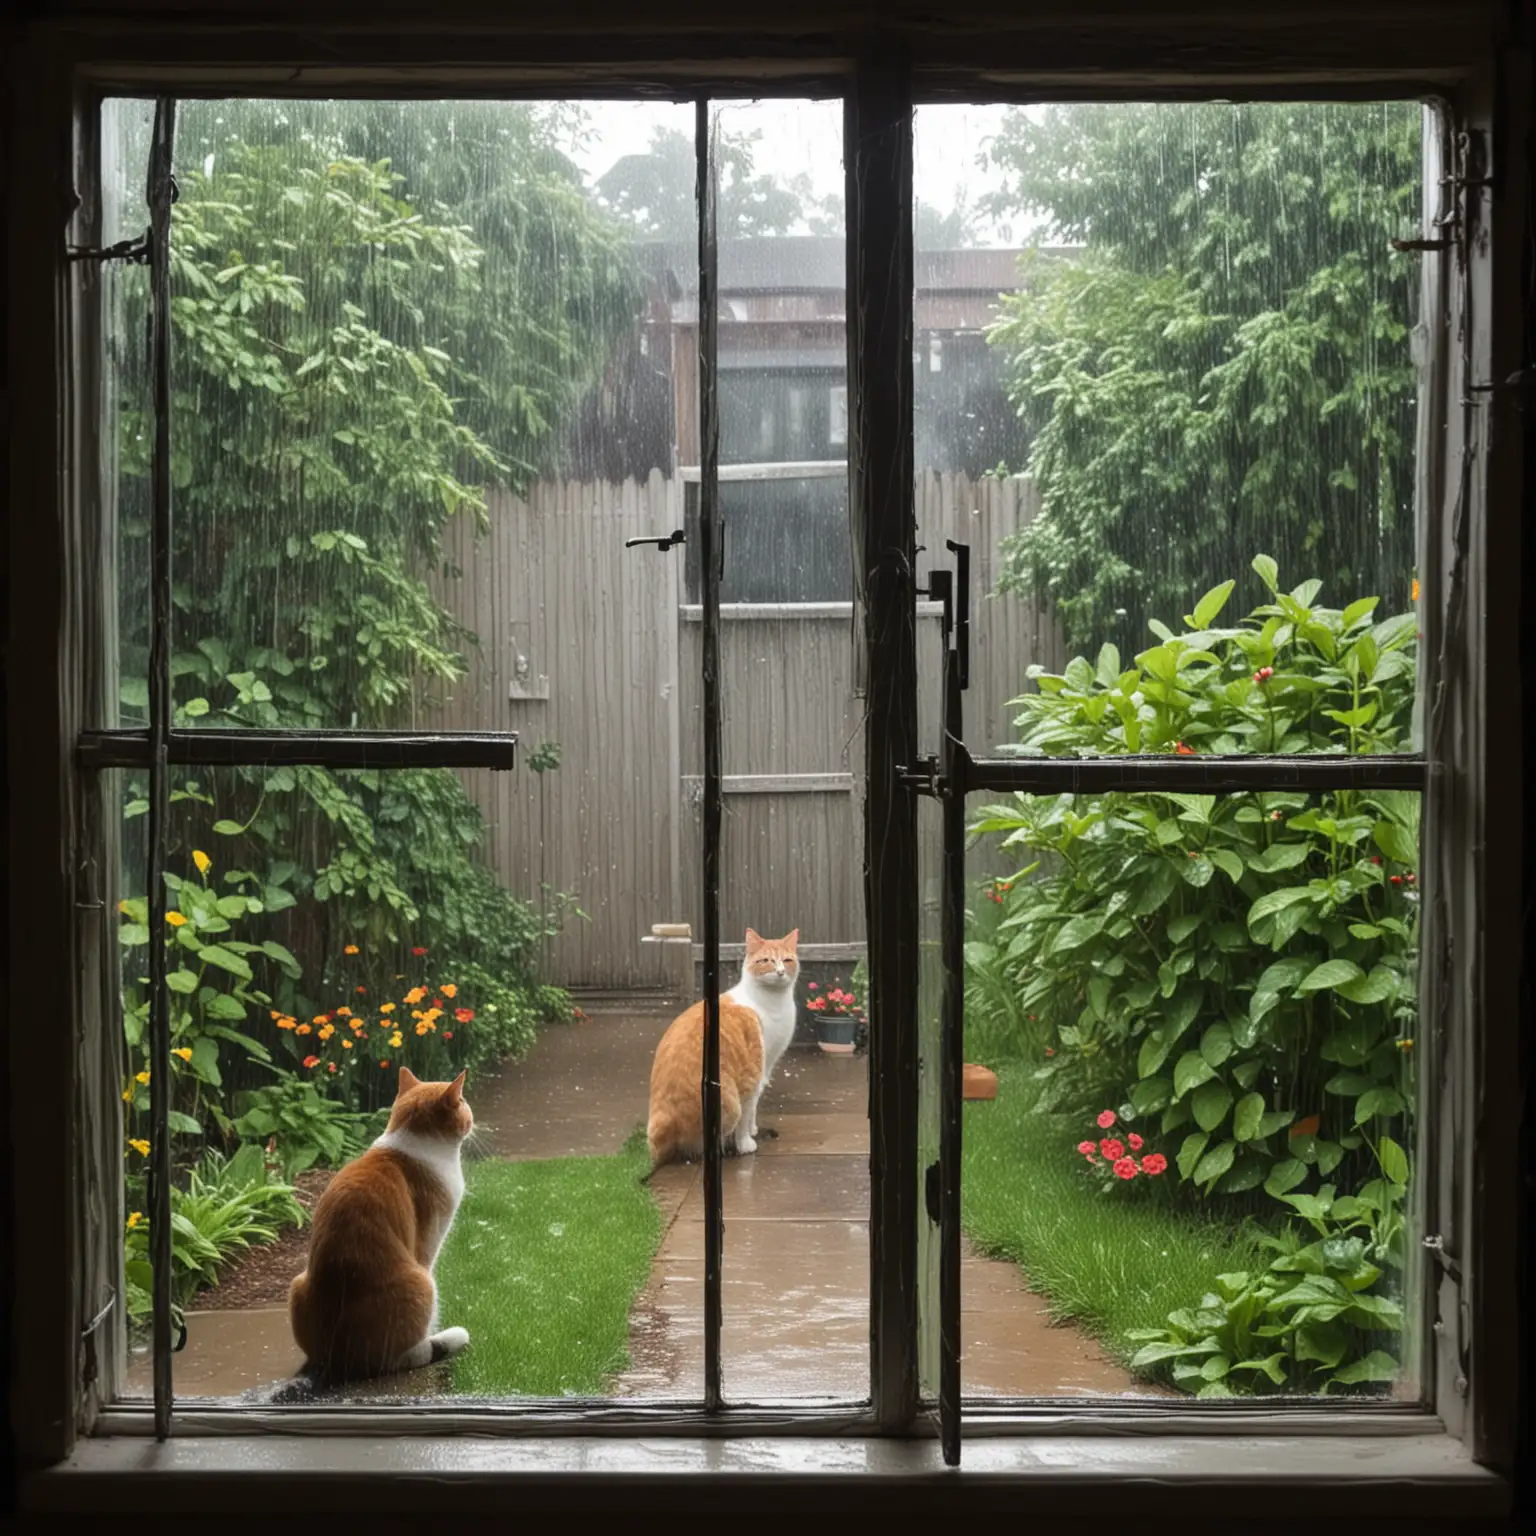 Cats Seeking Shelter from Rain in a Garden Backyard with Sunlight Through Clouds